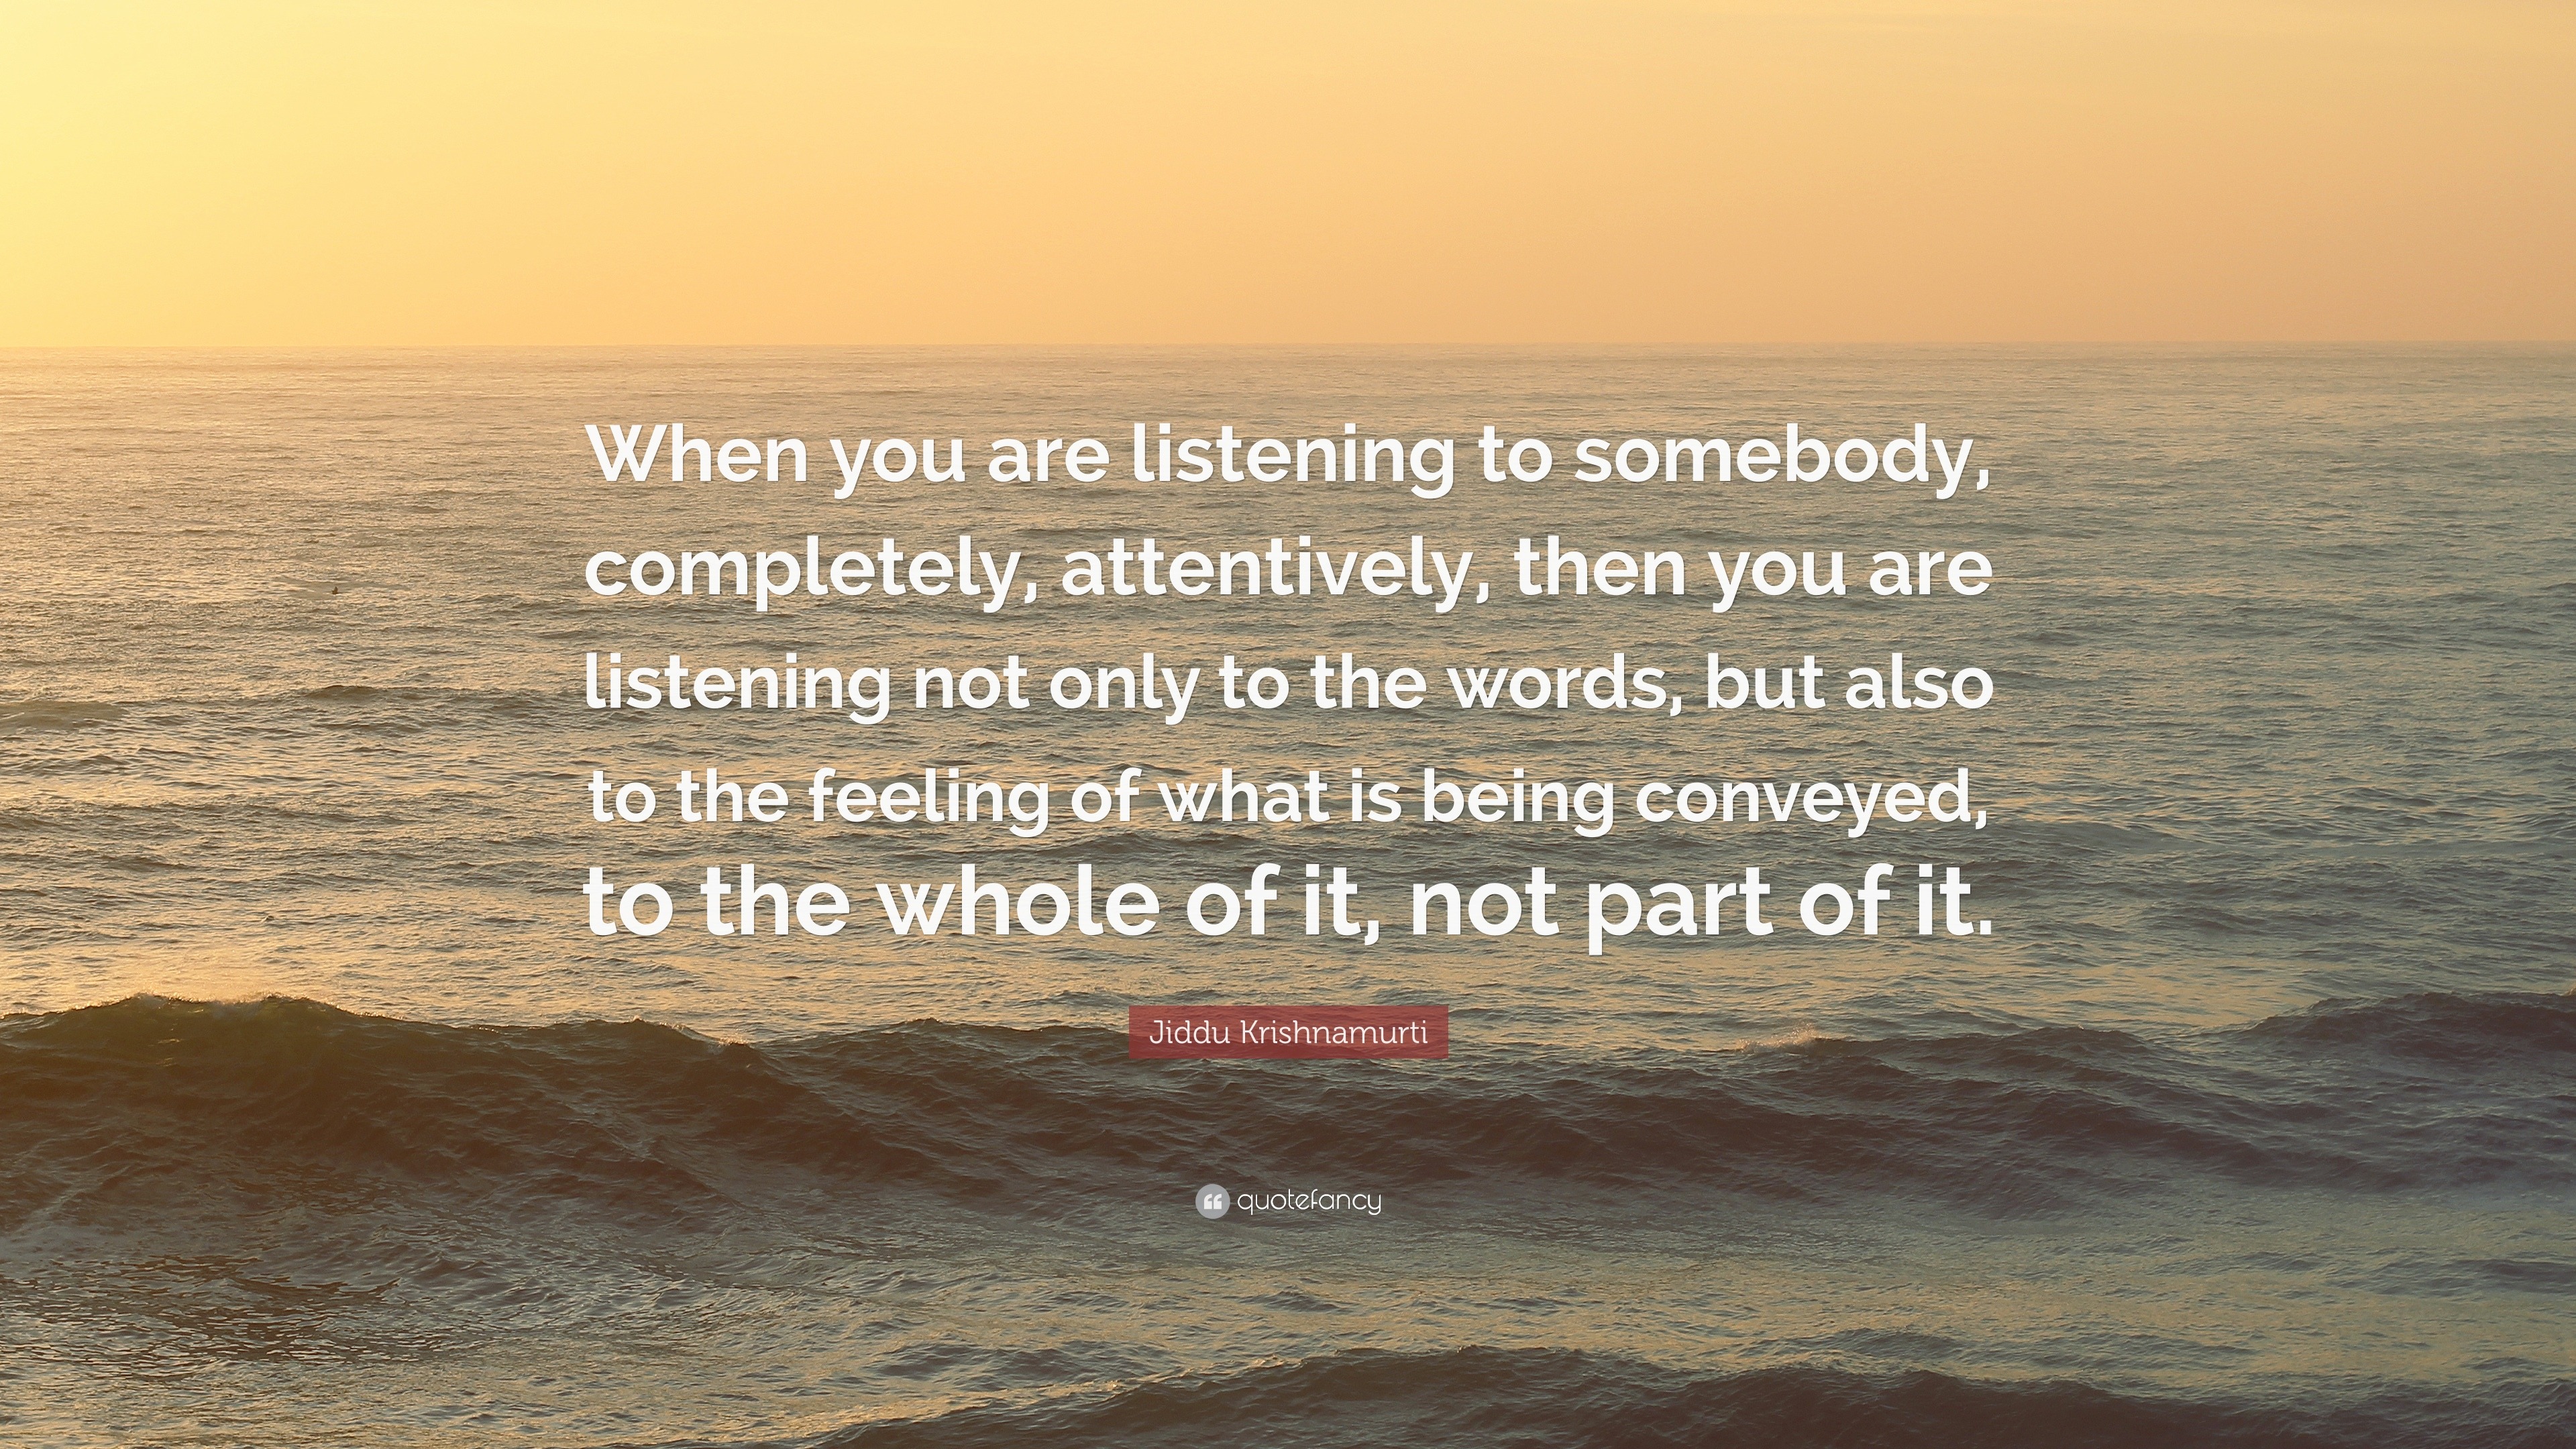 Jiddu Krishnamurti Quote: “When you are listening to somebody ...